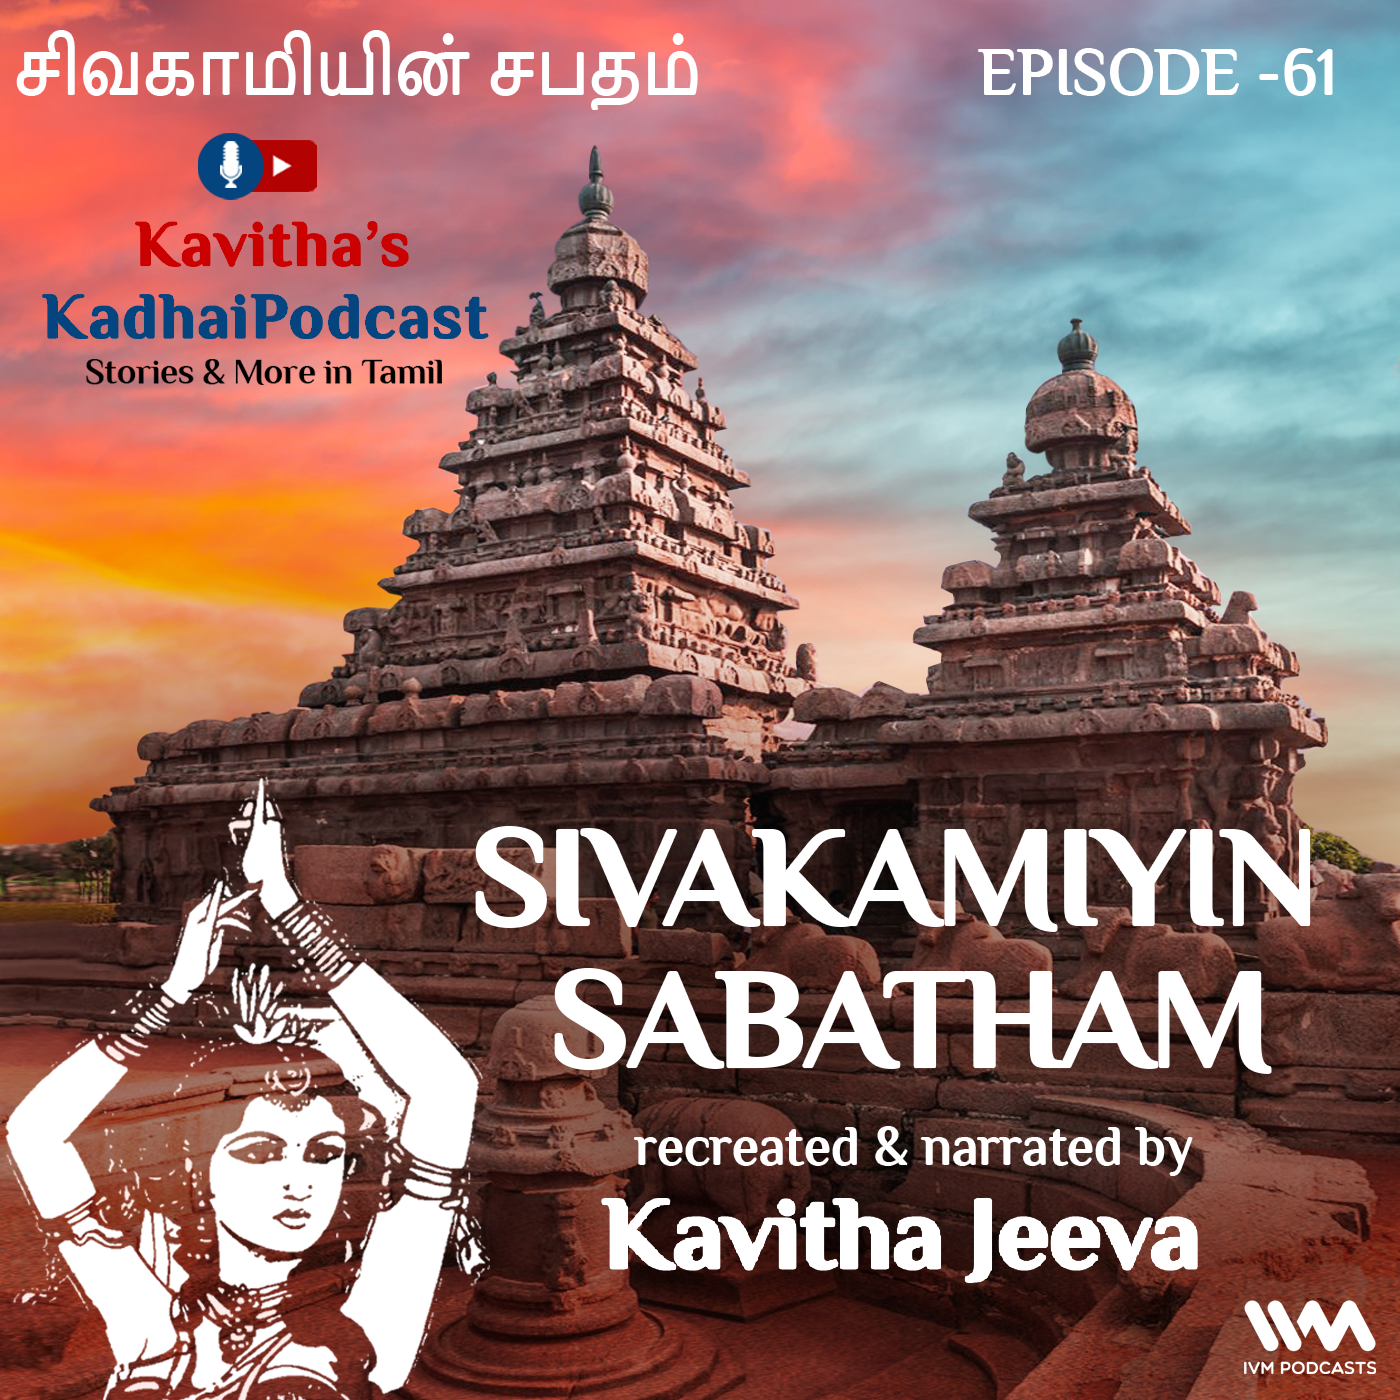 KadhaiPodcast's Sivakamiyin Sabatham - Episode # 61